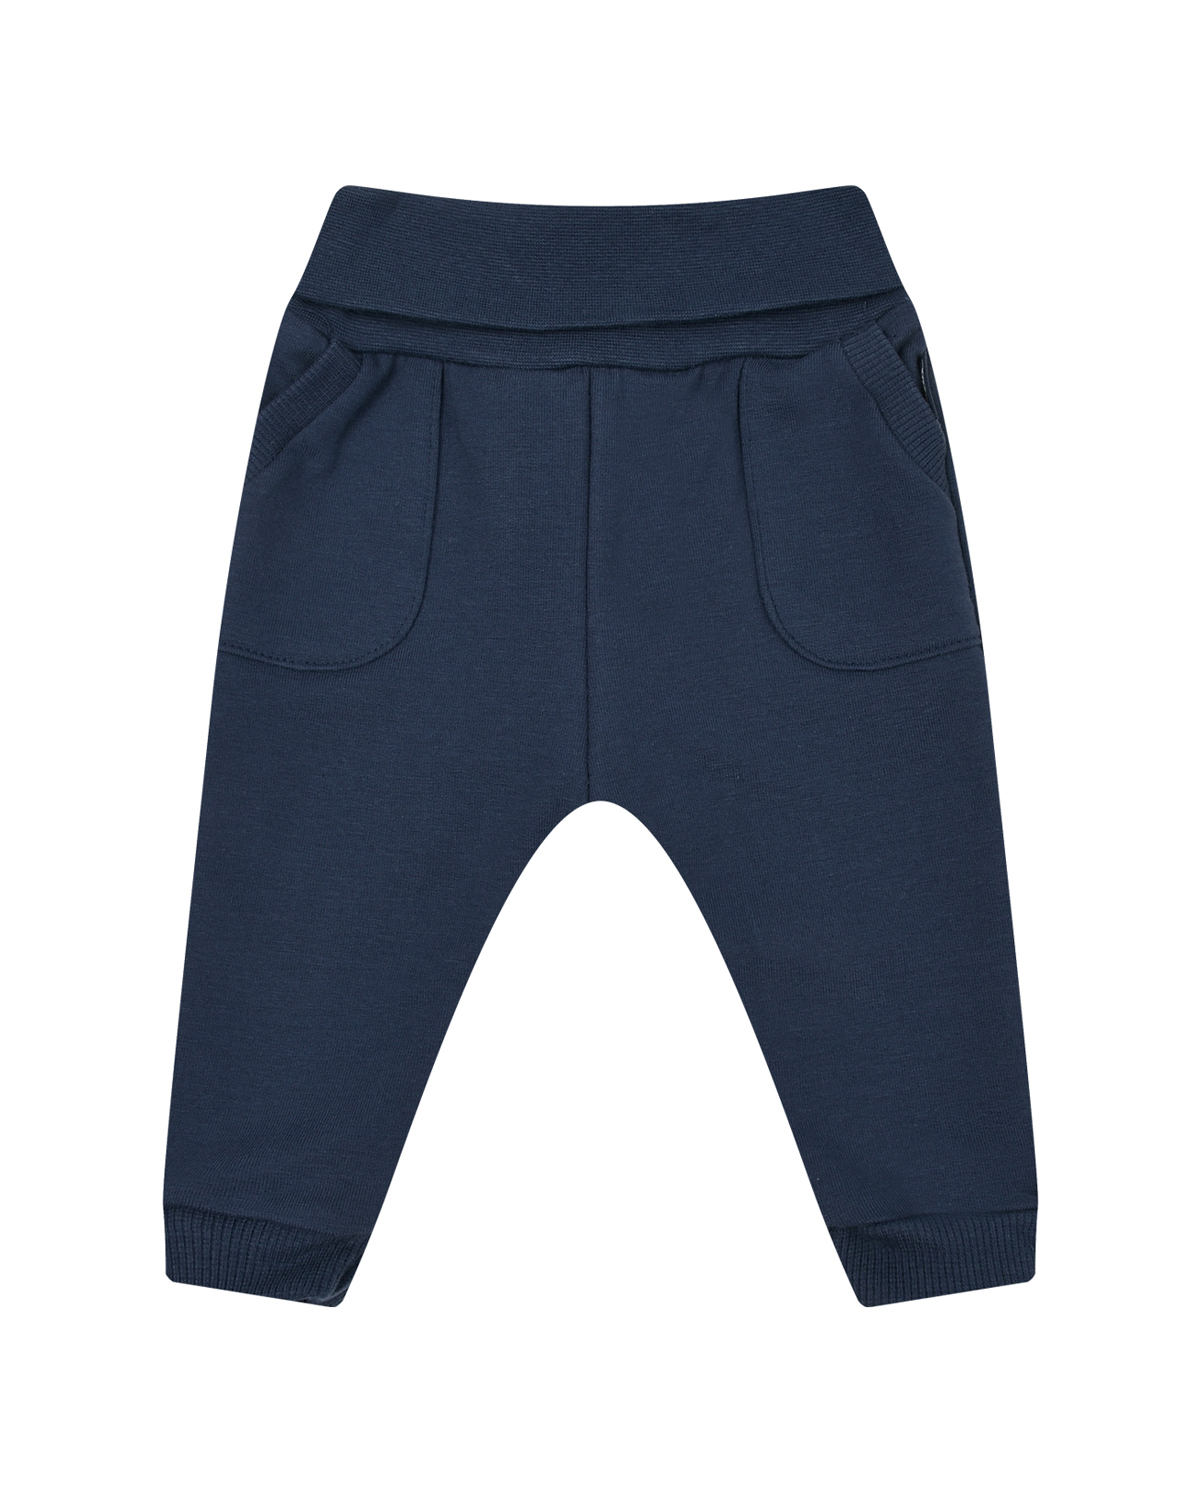 Темно-синие спортивные брюки Sanetta fiftyseven персиковые спортивные брюки с принтом в полоску sanetta fiftyseven детские